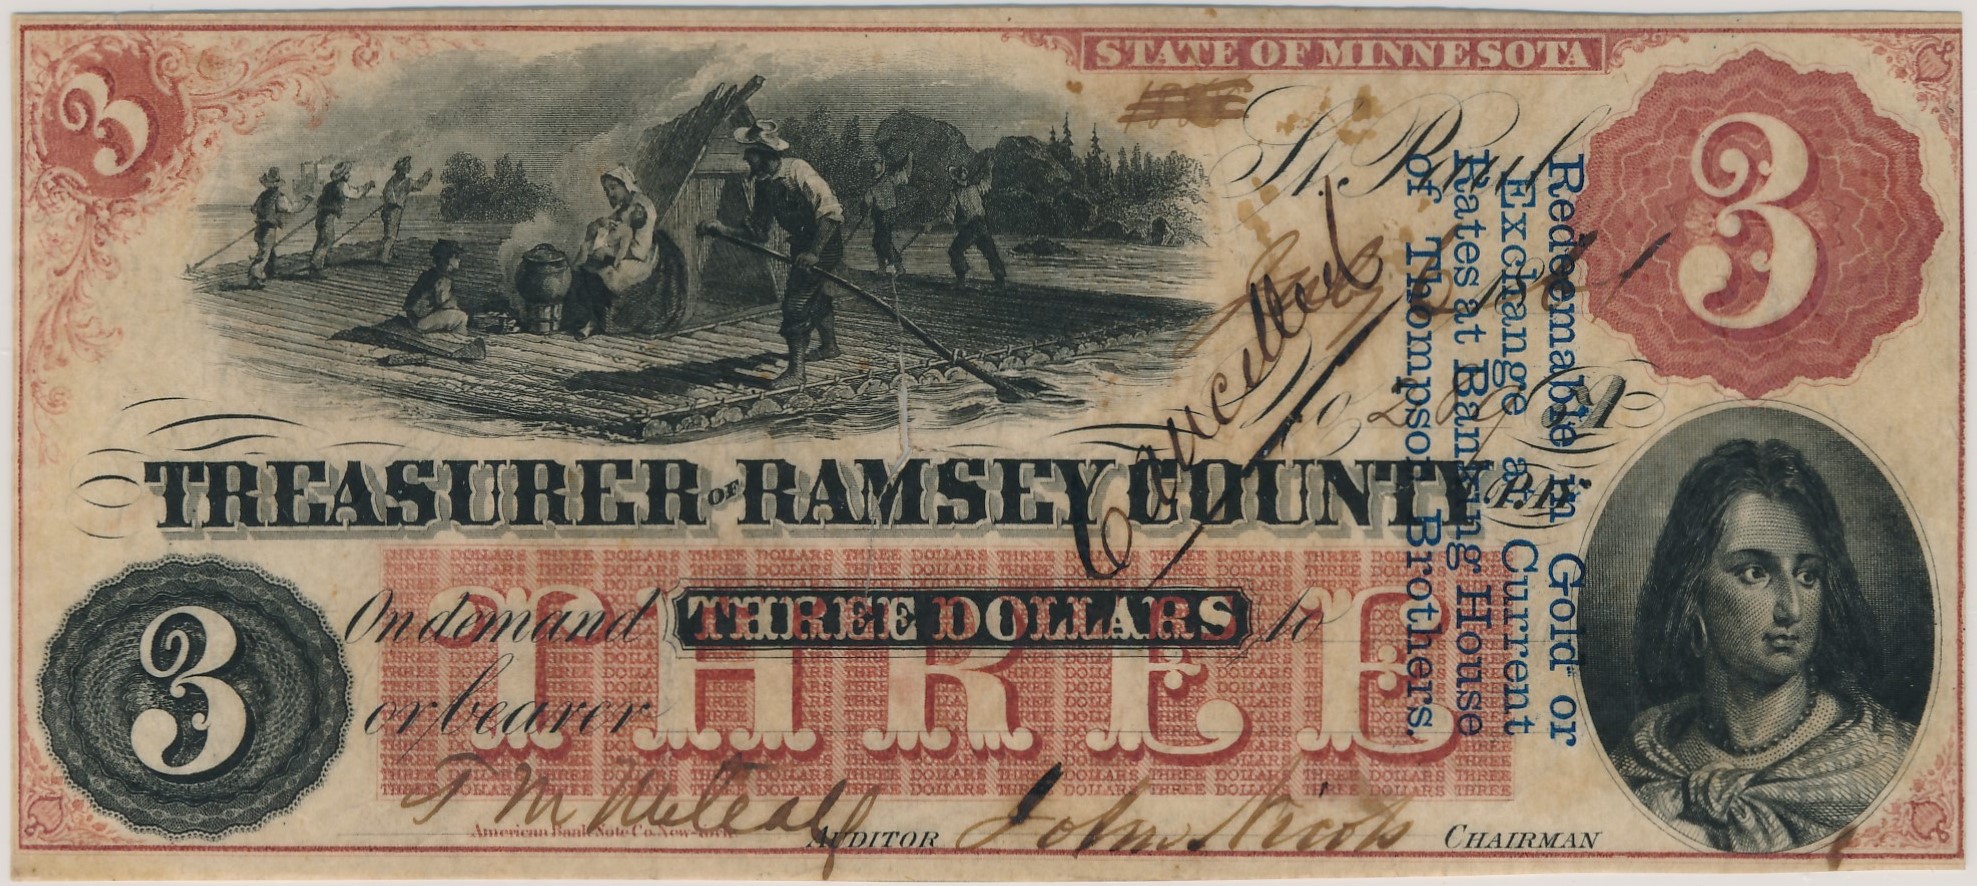 Treasurer of Ramsey County